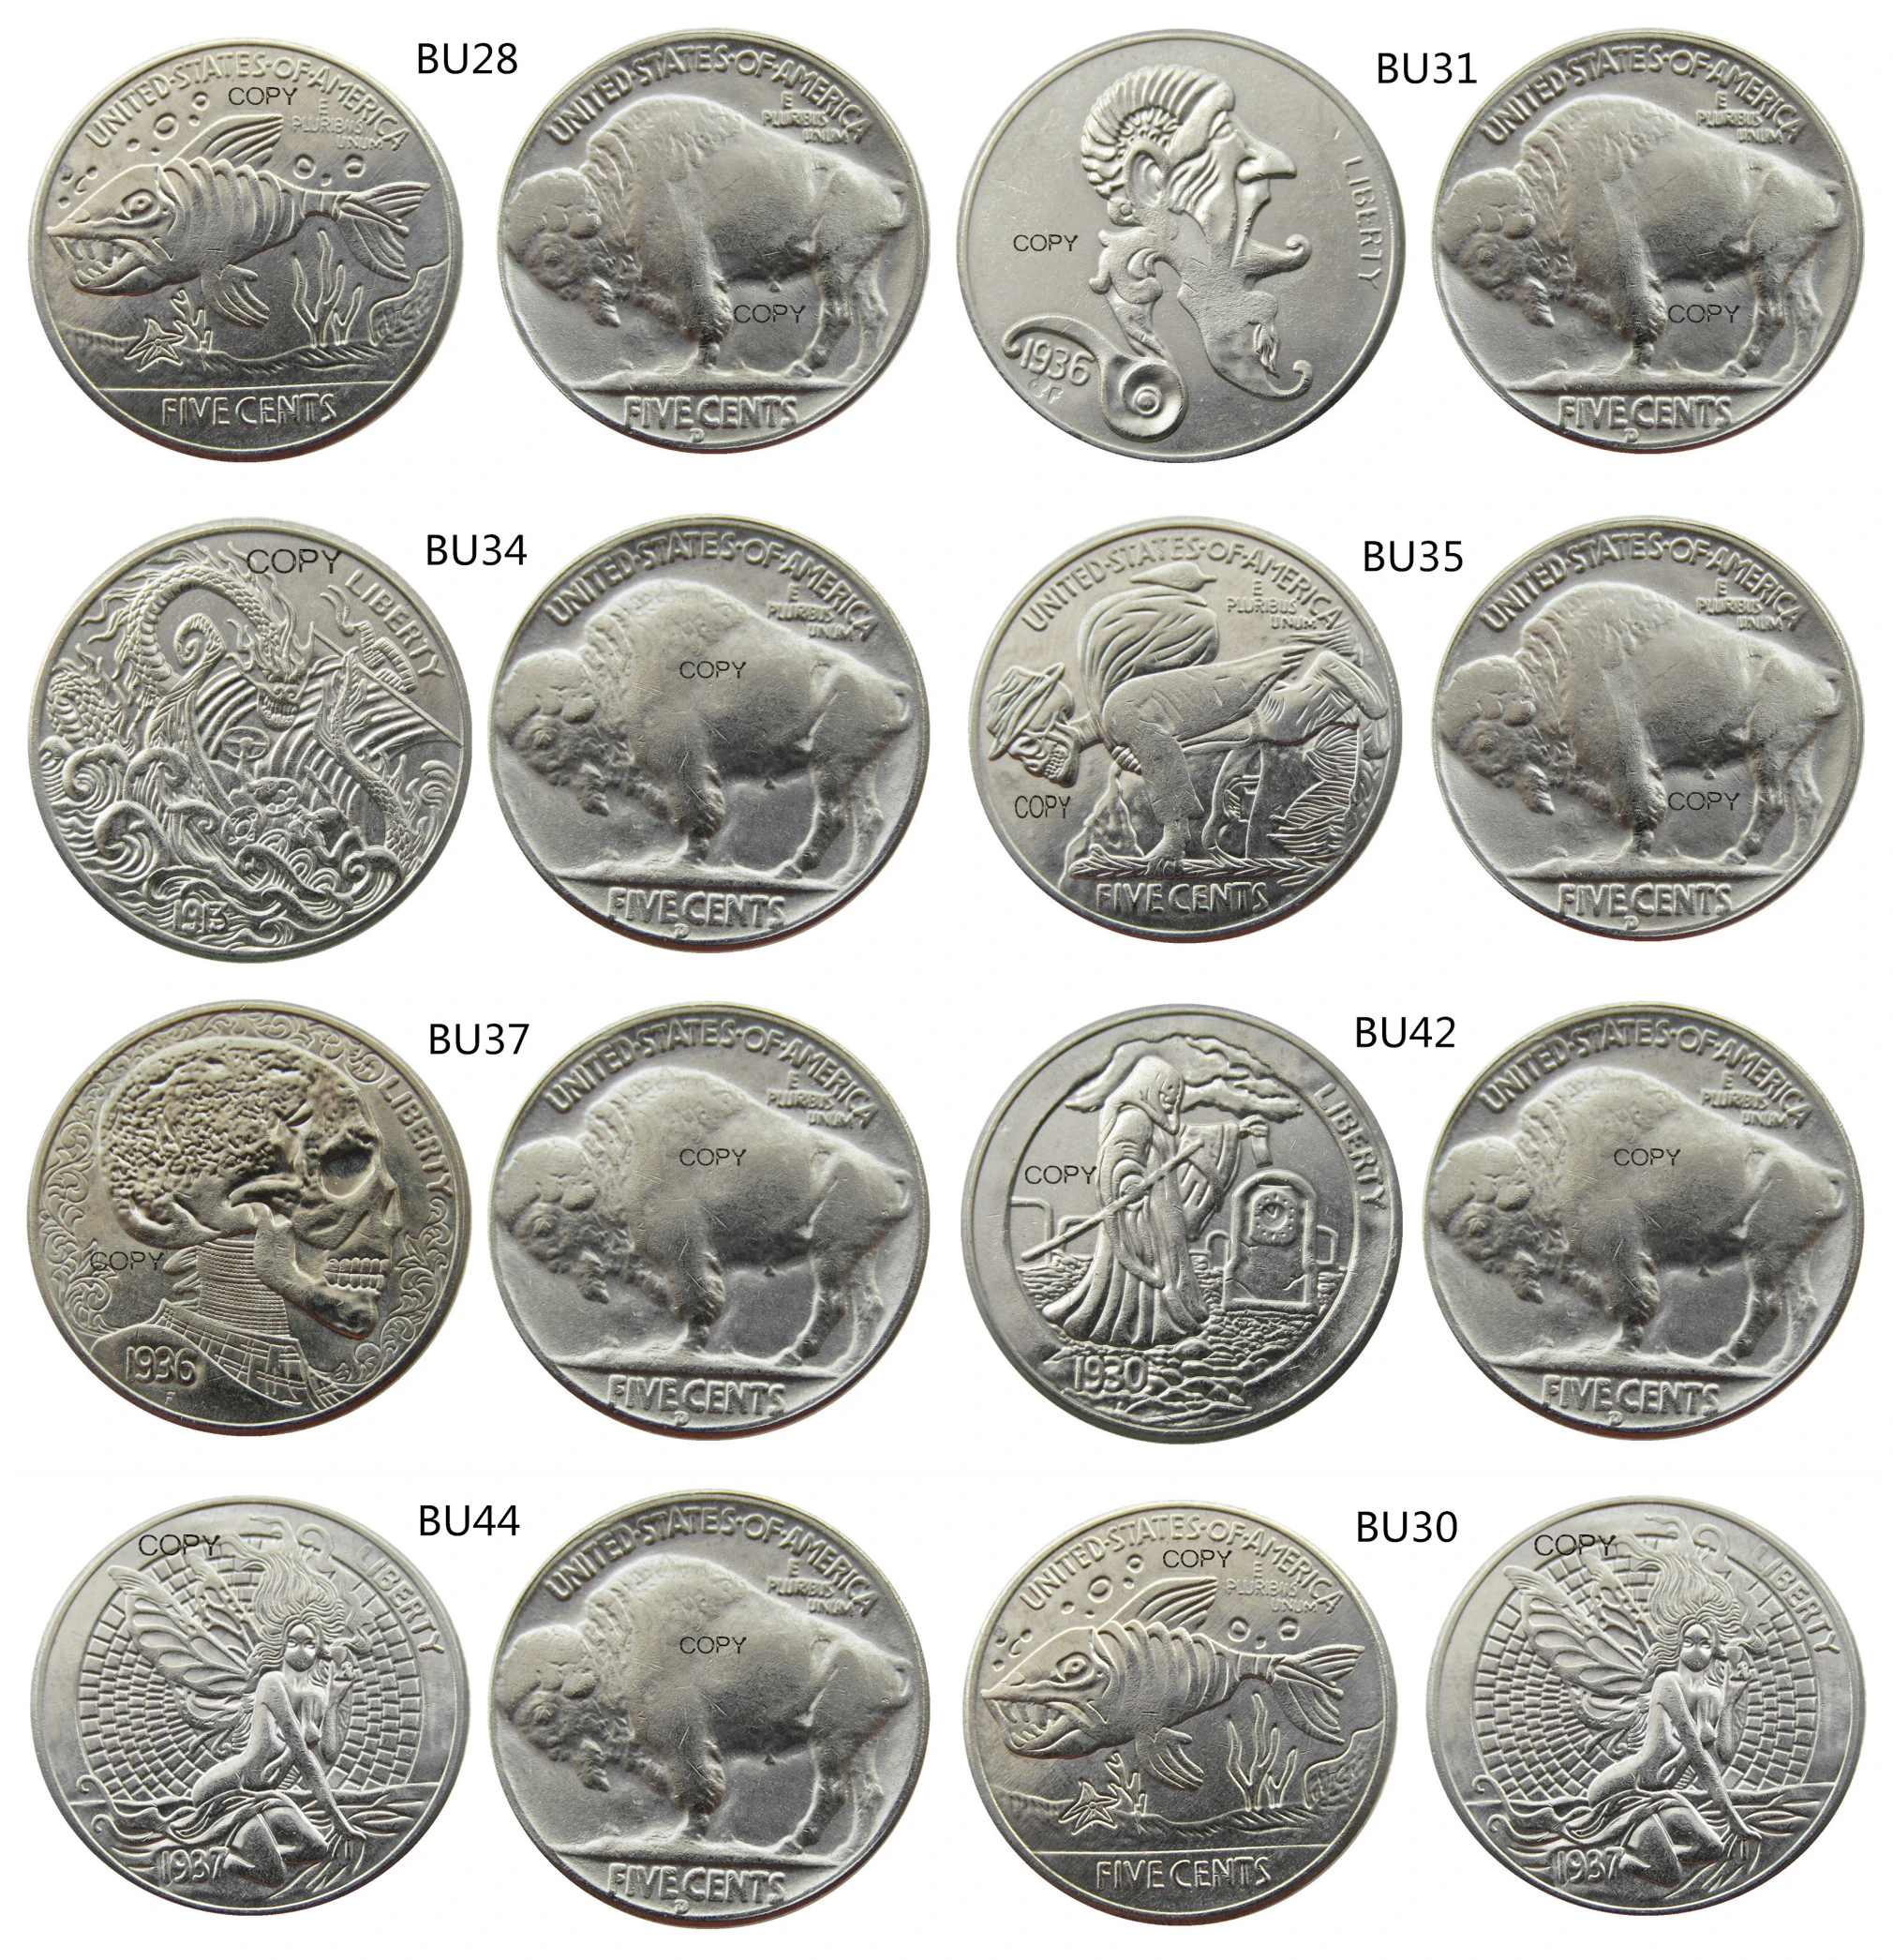 xuanyuan Hobo Nickel Coin Année aléatoire Buffalo Nickel Copie pièces pièces de Collection commémoratives